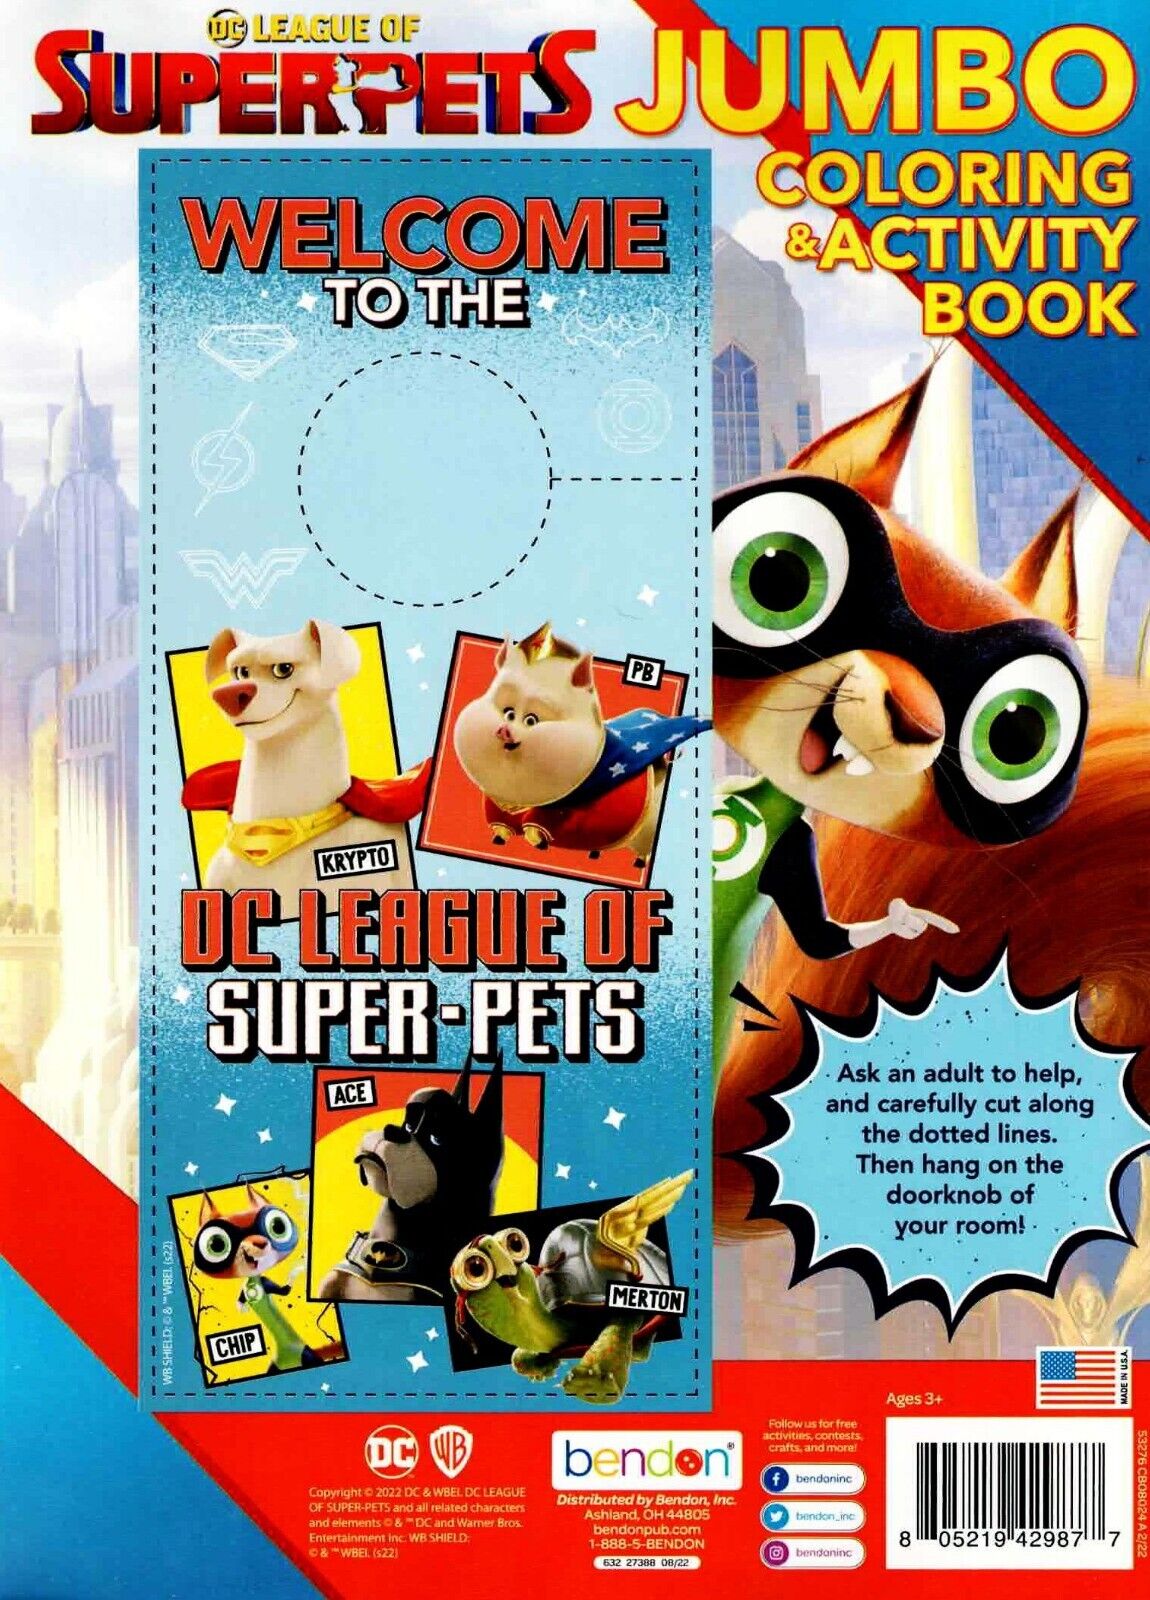 DC League of Super Pets - Jumbo Coloring & Activity Book